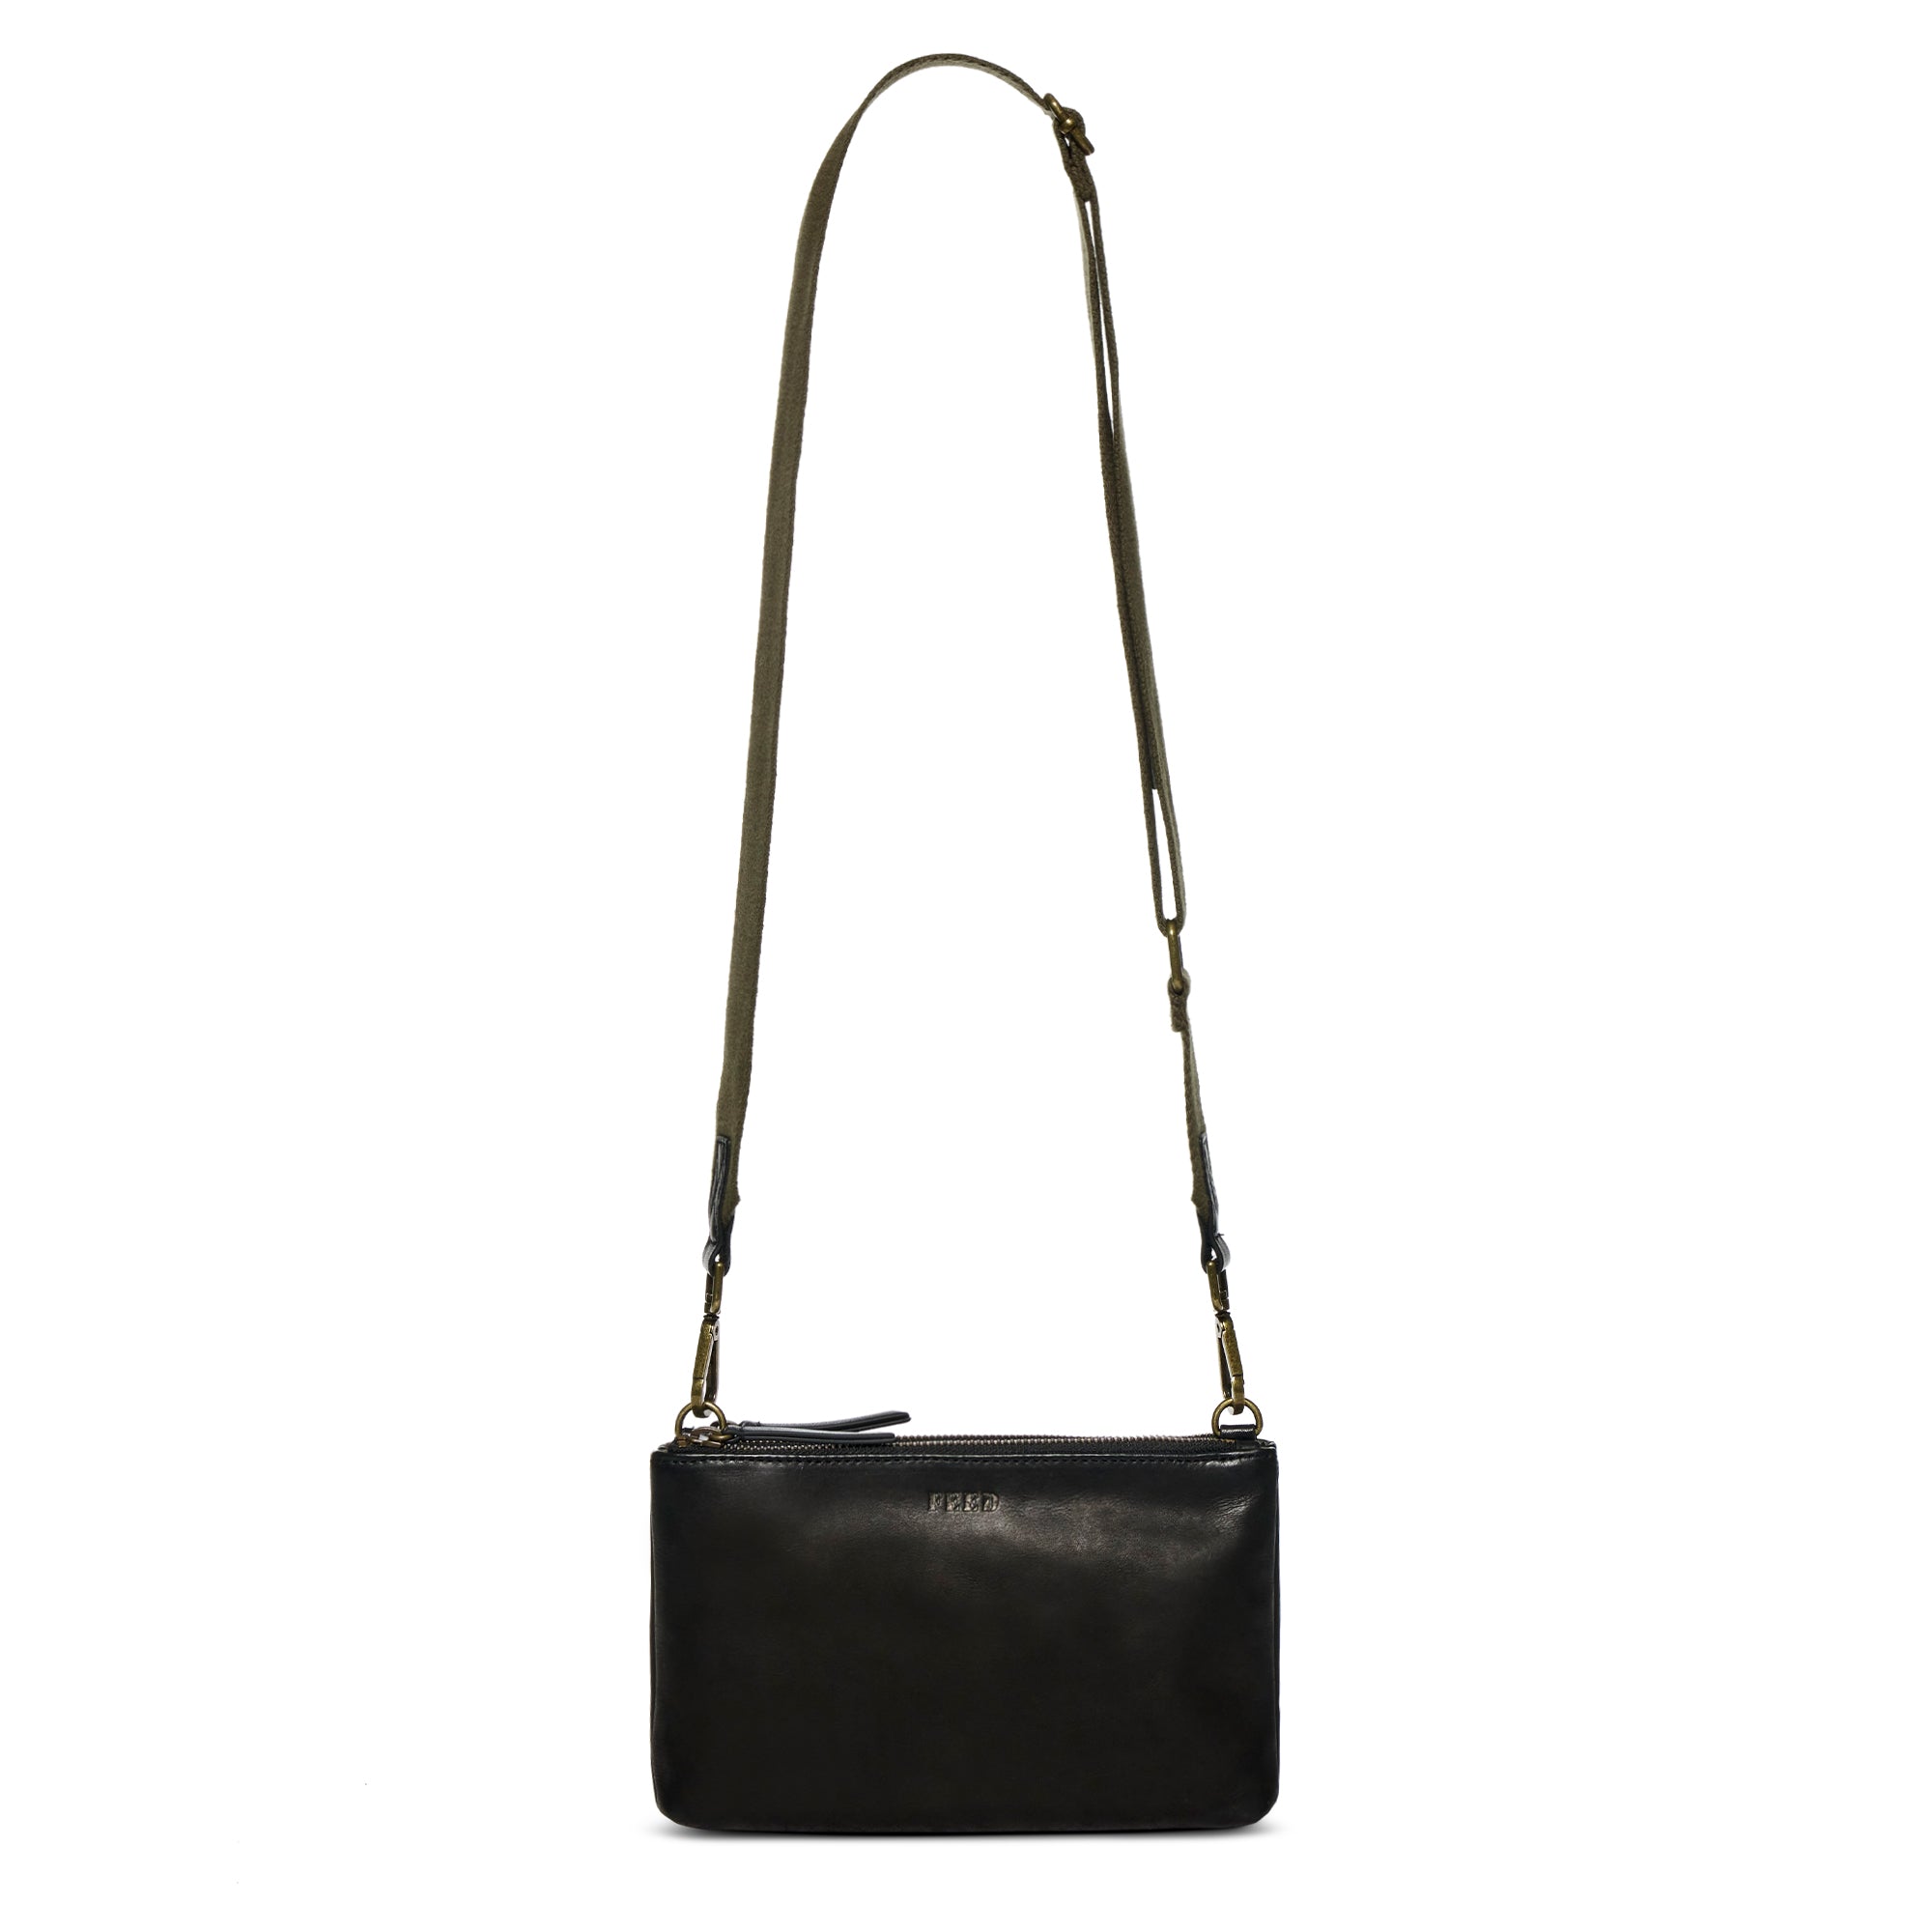 PU Leather Black Sling Bag, Packaging Type: Plastic Bag